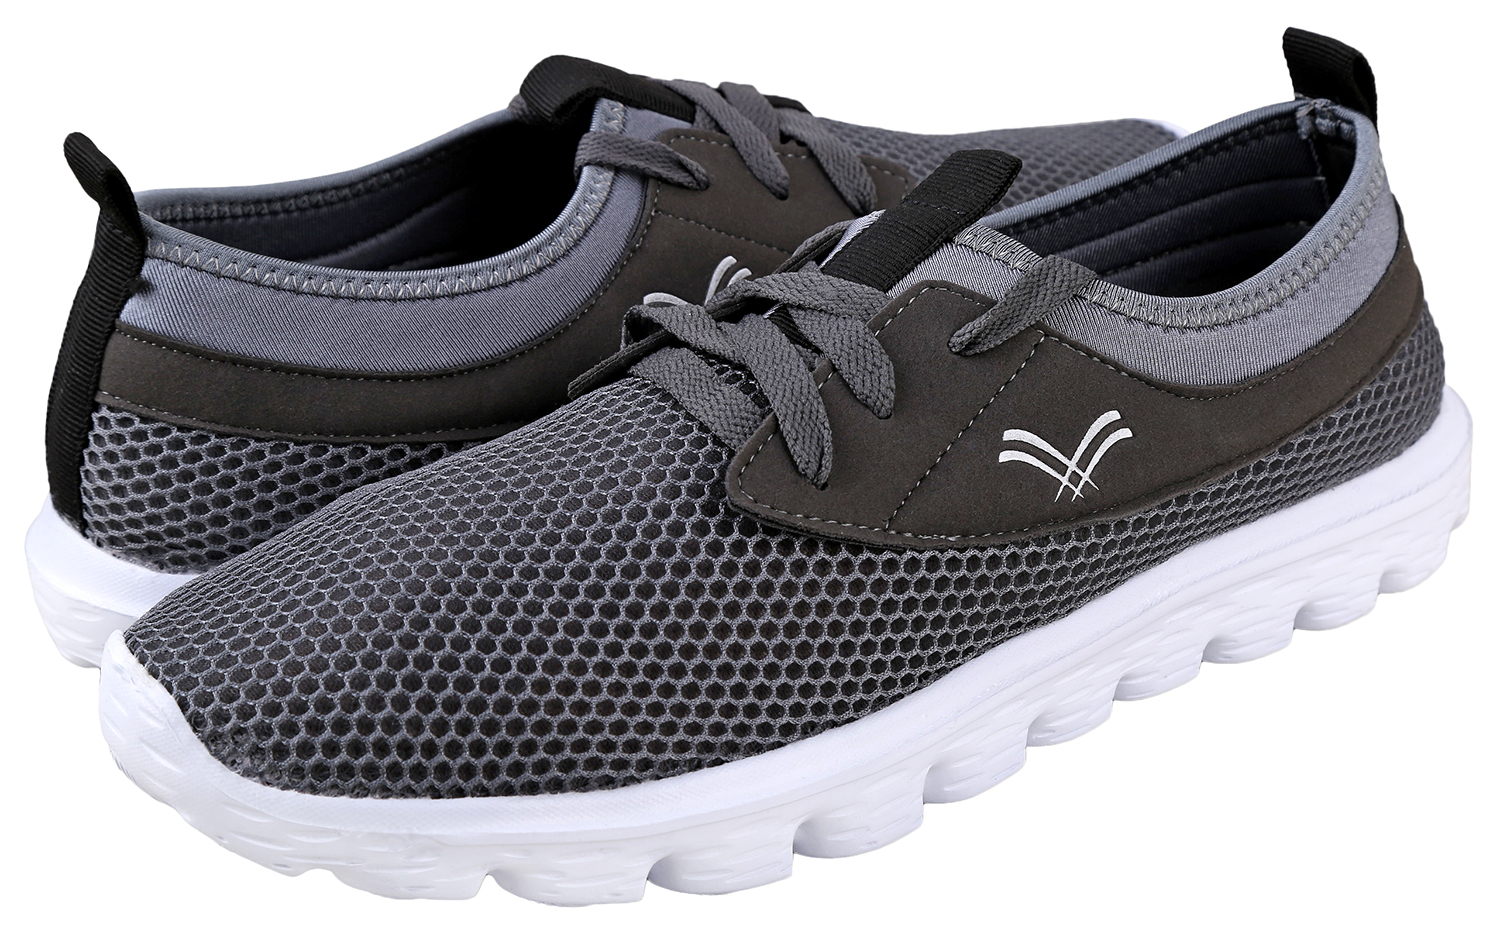 Urban Fox Men's Breeze Lightweight Shoes | Lightweight Shoes for Men | Casual Shoes | Walking Shoes for Men | Grey/White 11 M US - image 5 of 7